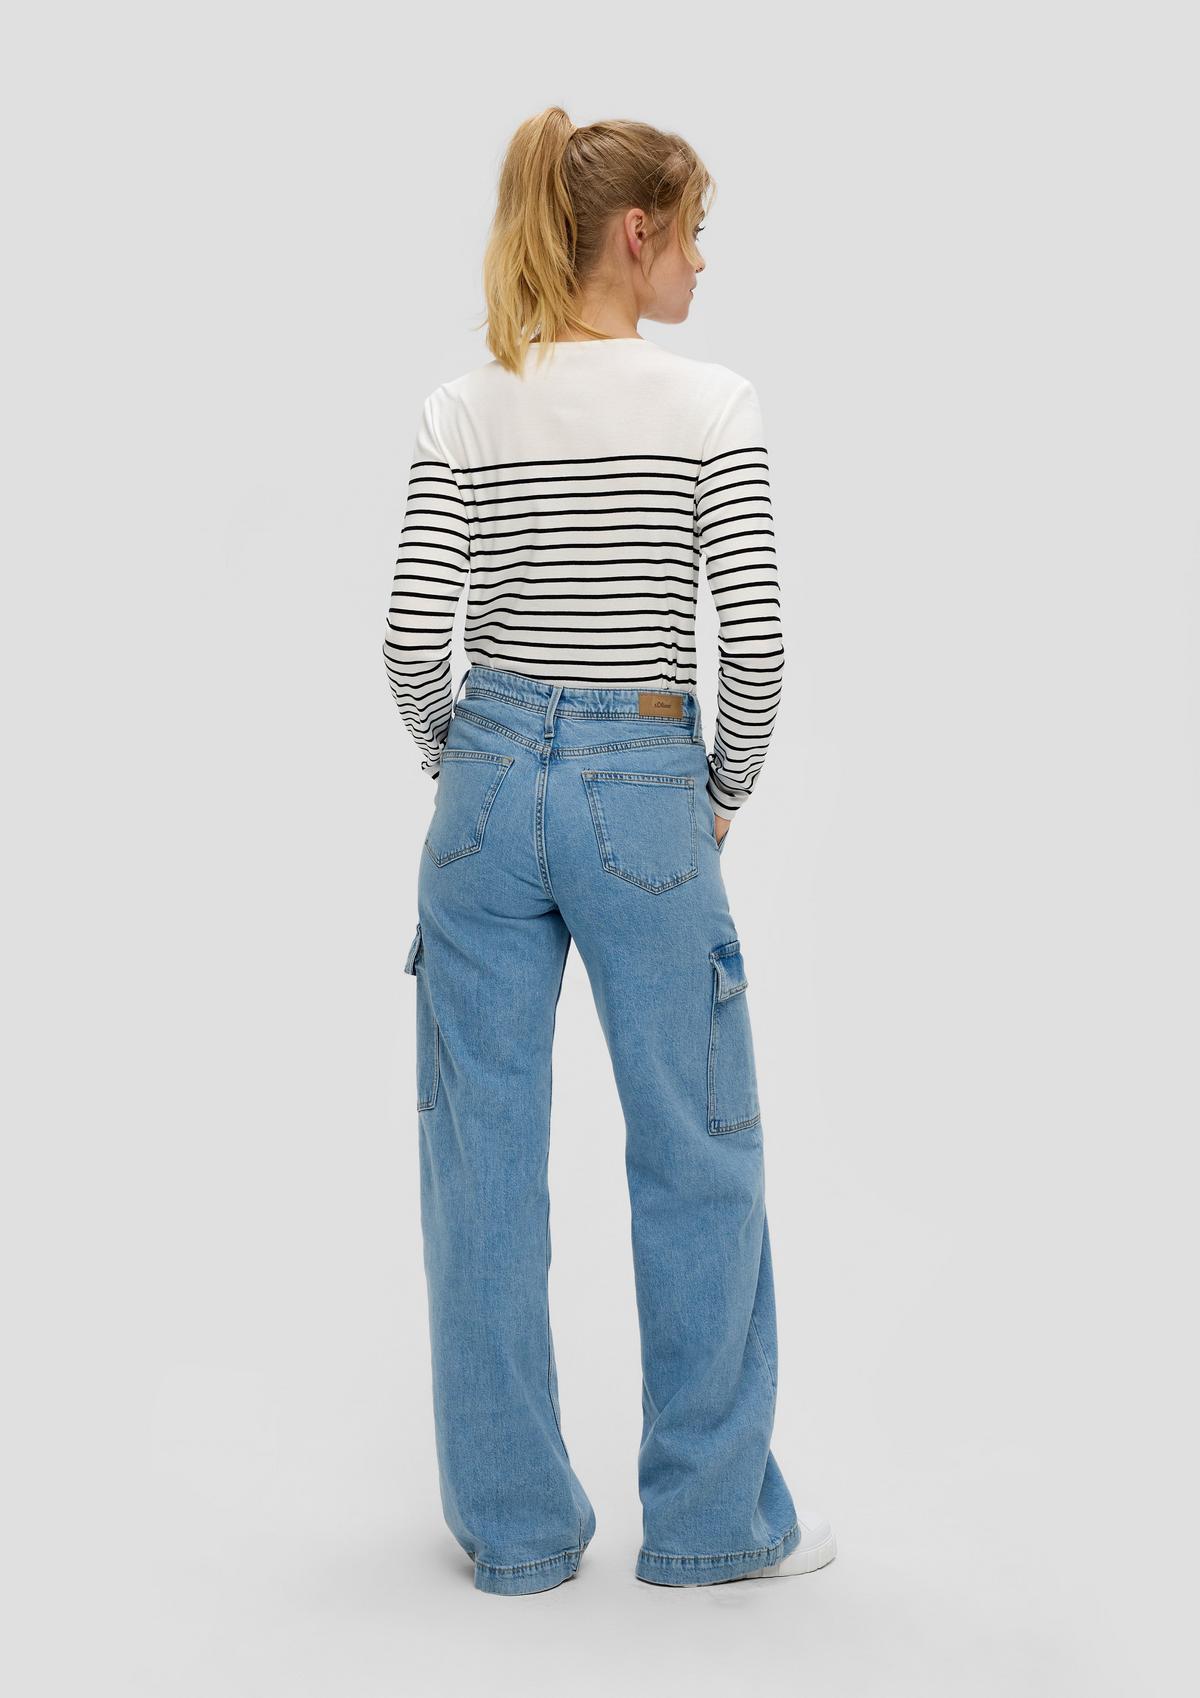 s.Oliver Suri jeans / mid rise / wide leg / cargo pockets